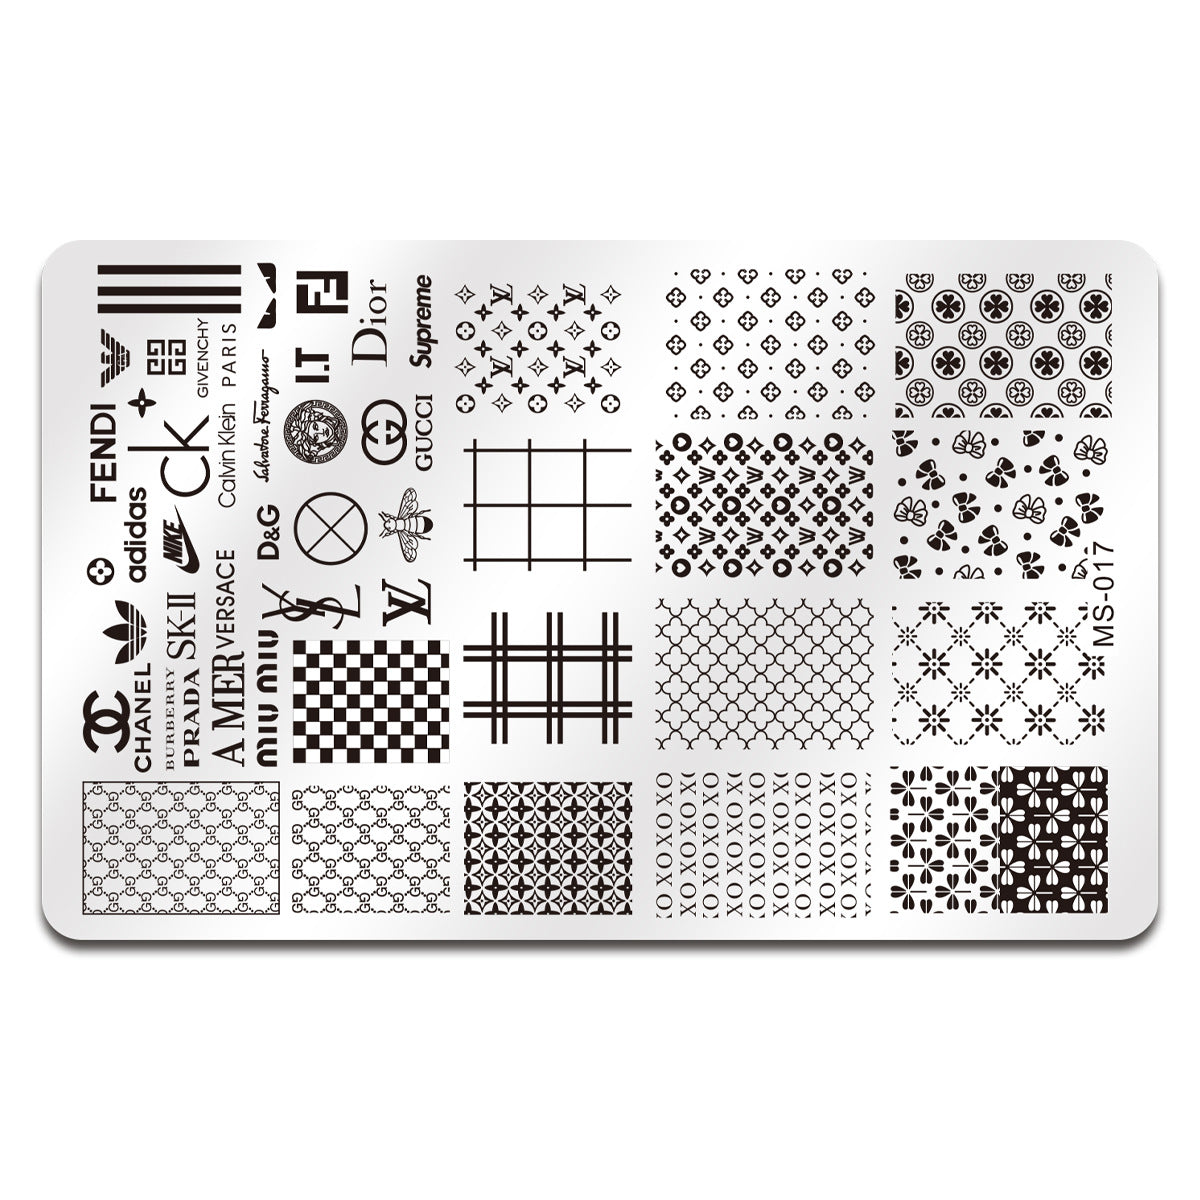 Designer Nail Stamp Plate-Luxury 01